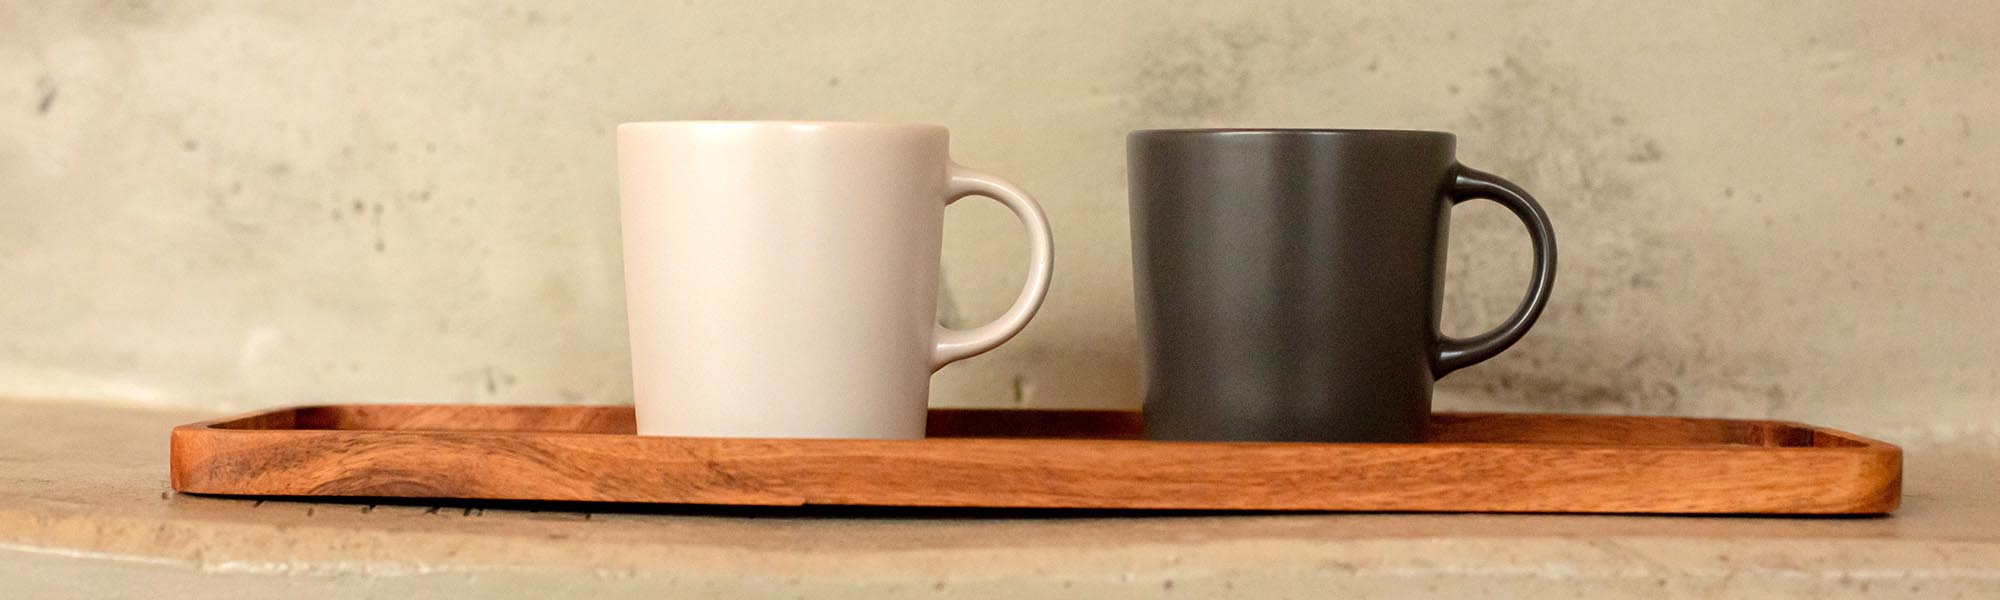 Cream and black mug on a wooden shelf